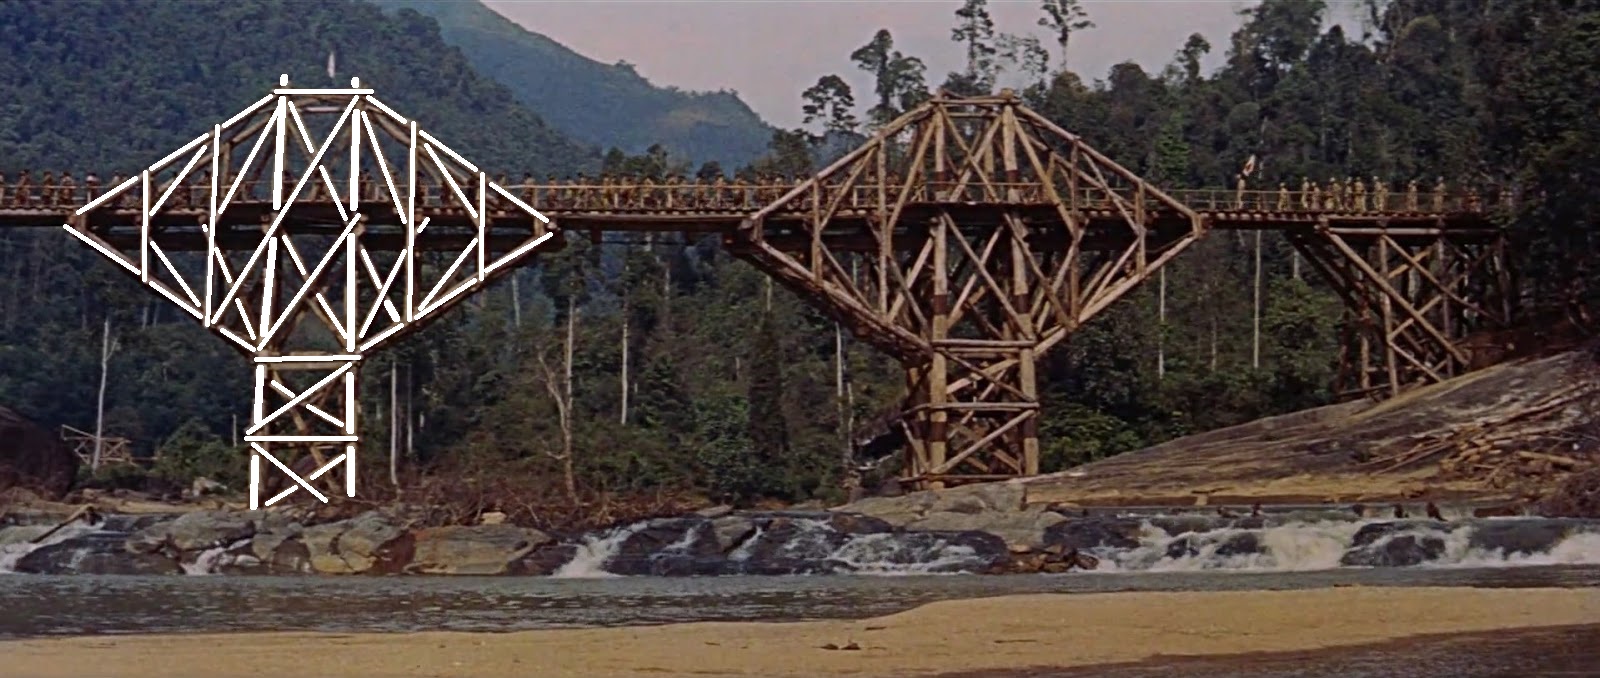 The-Bridge-On-The-River-Kwai-OVERLAYS.jpg